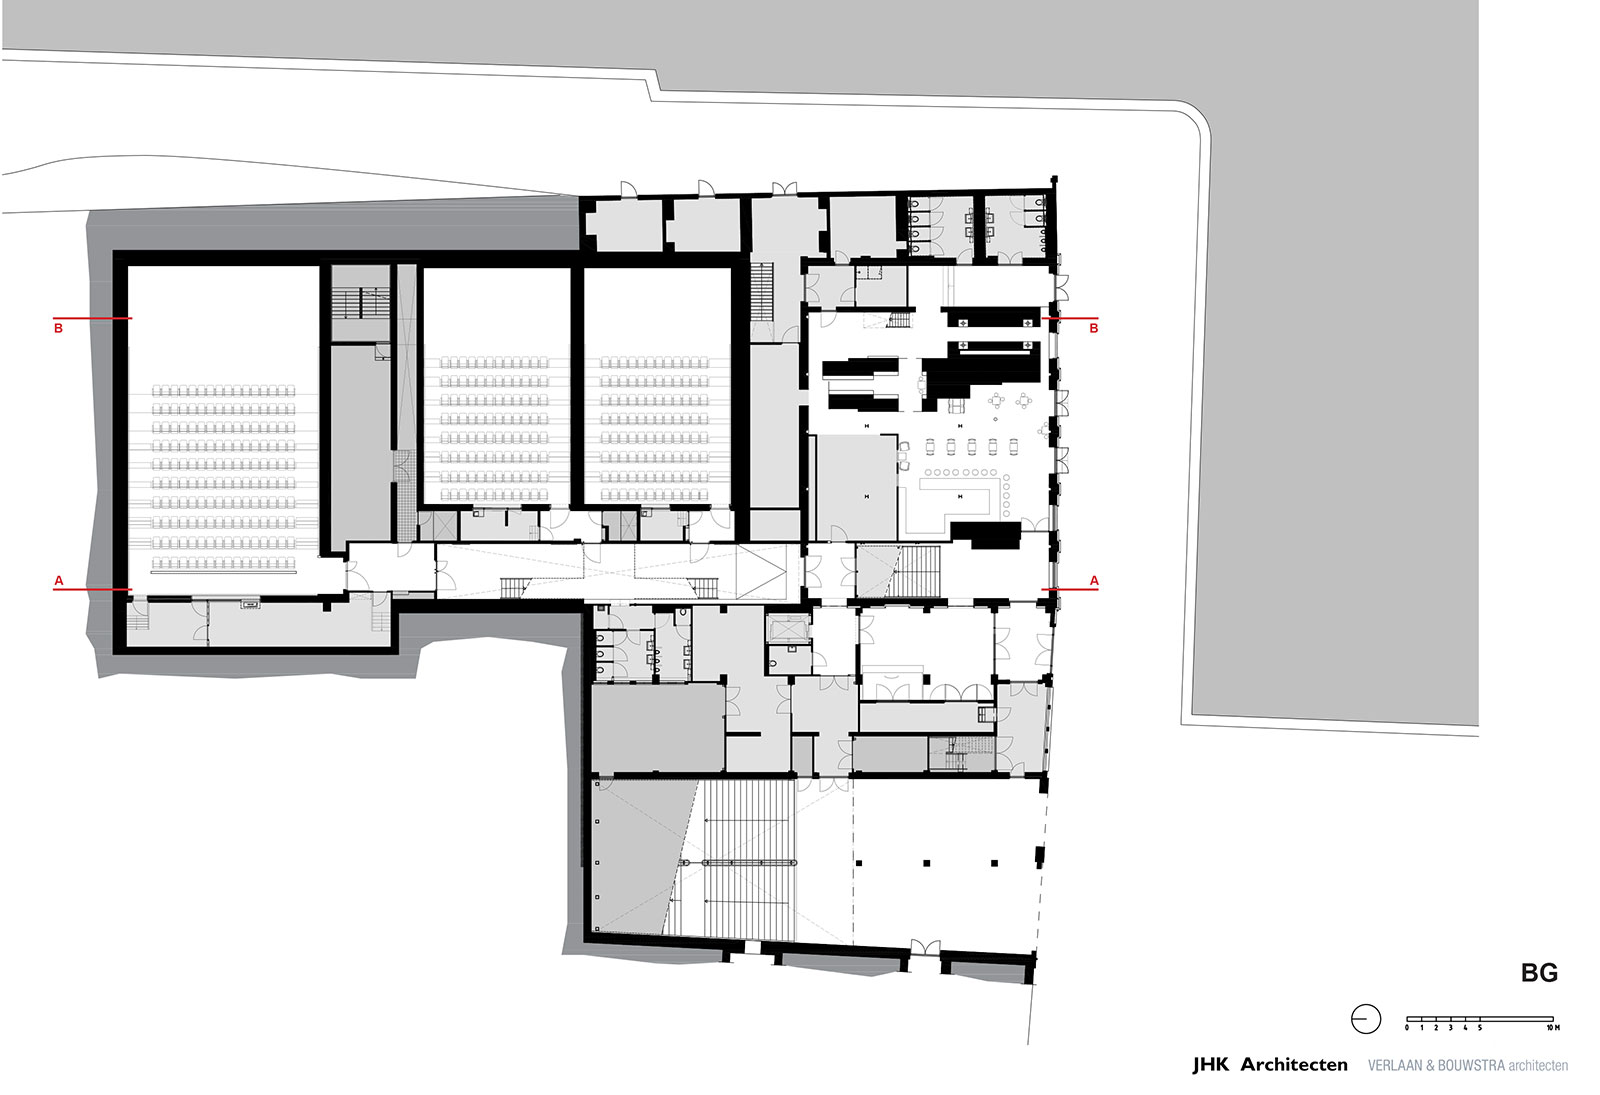 JHK Architecten Lumiere Cinema floorplans and sections 3